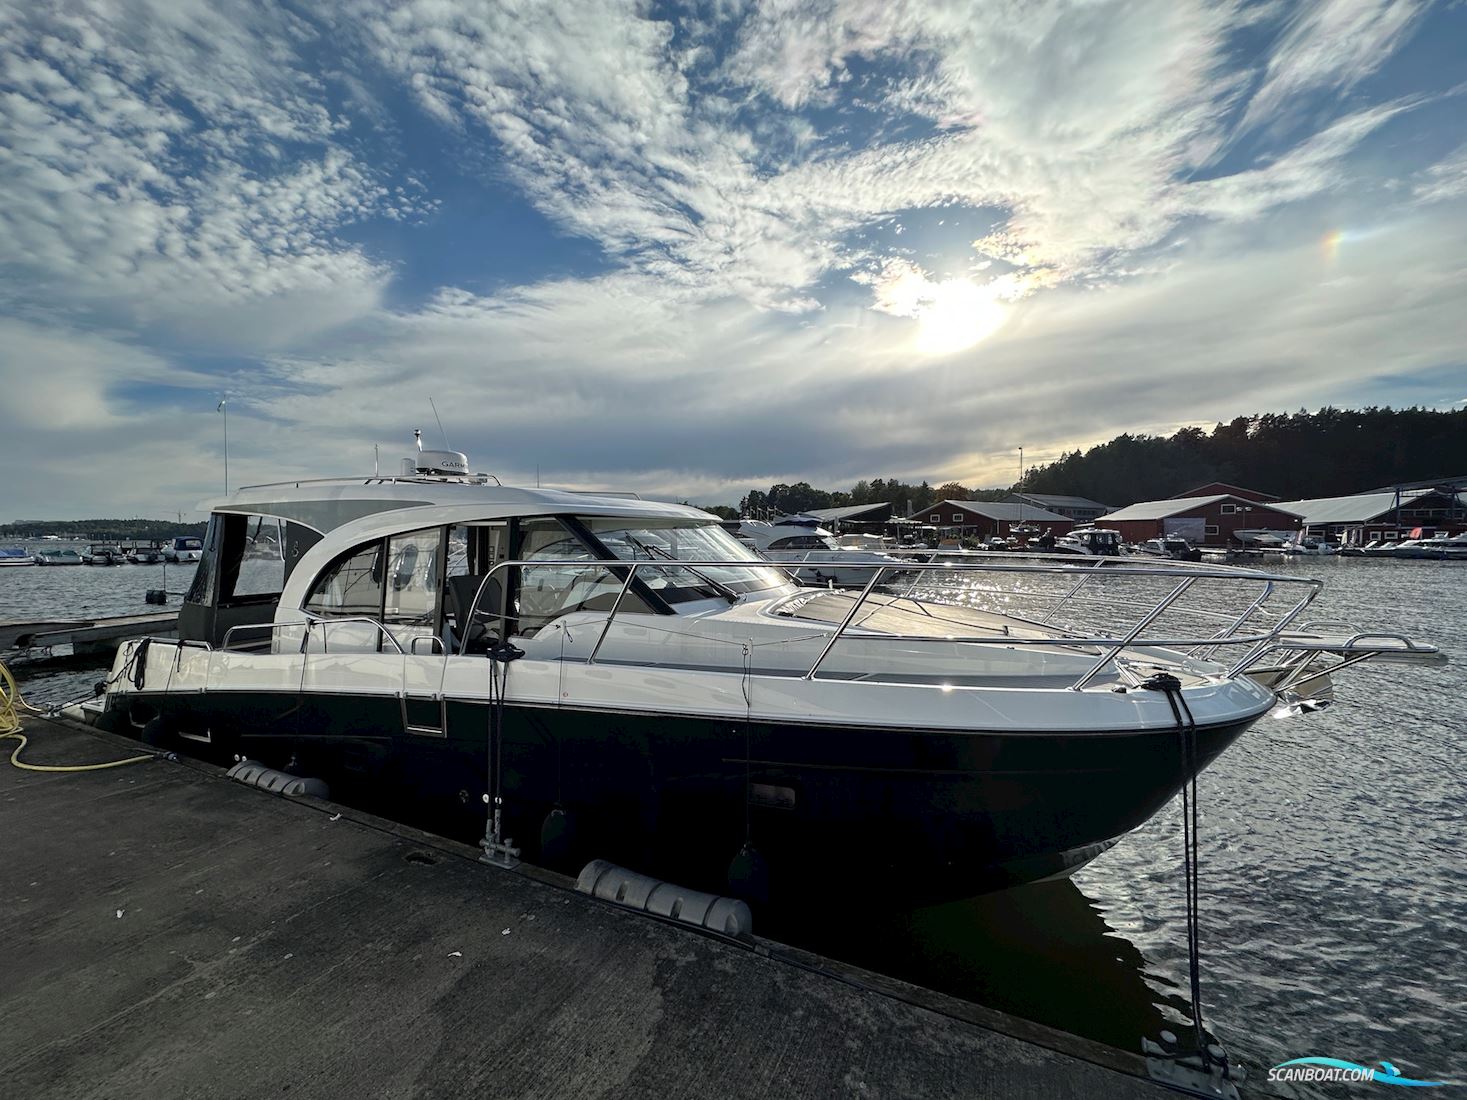 Beneteau Antares 11 Motor boat 2021, with Mercury Twin F250 Xxl engine, Sweden